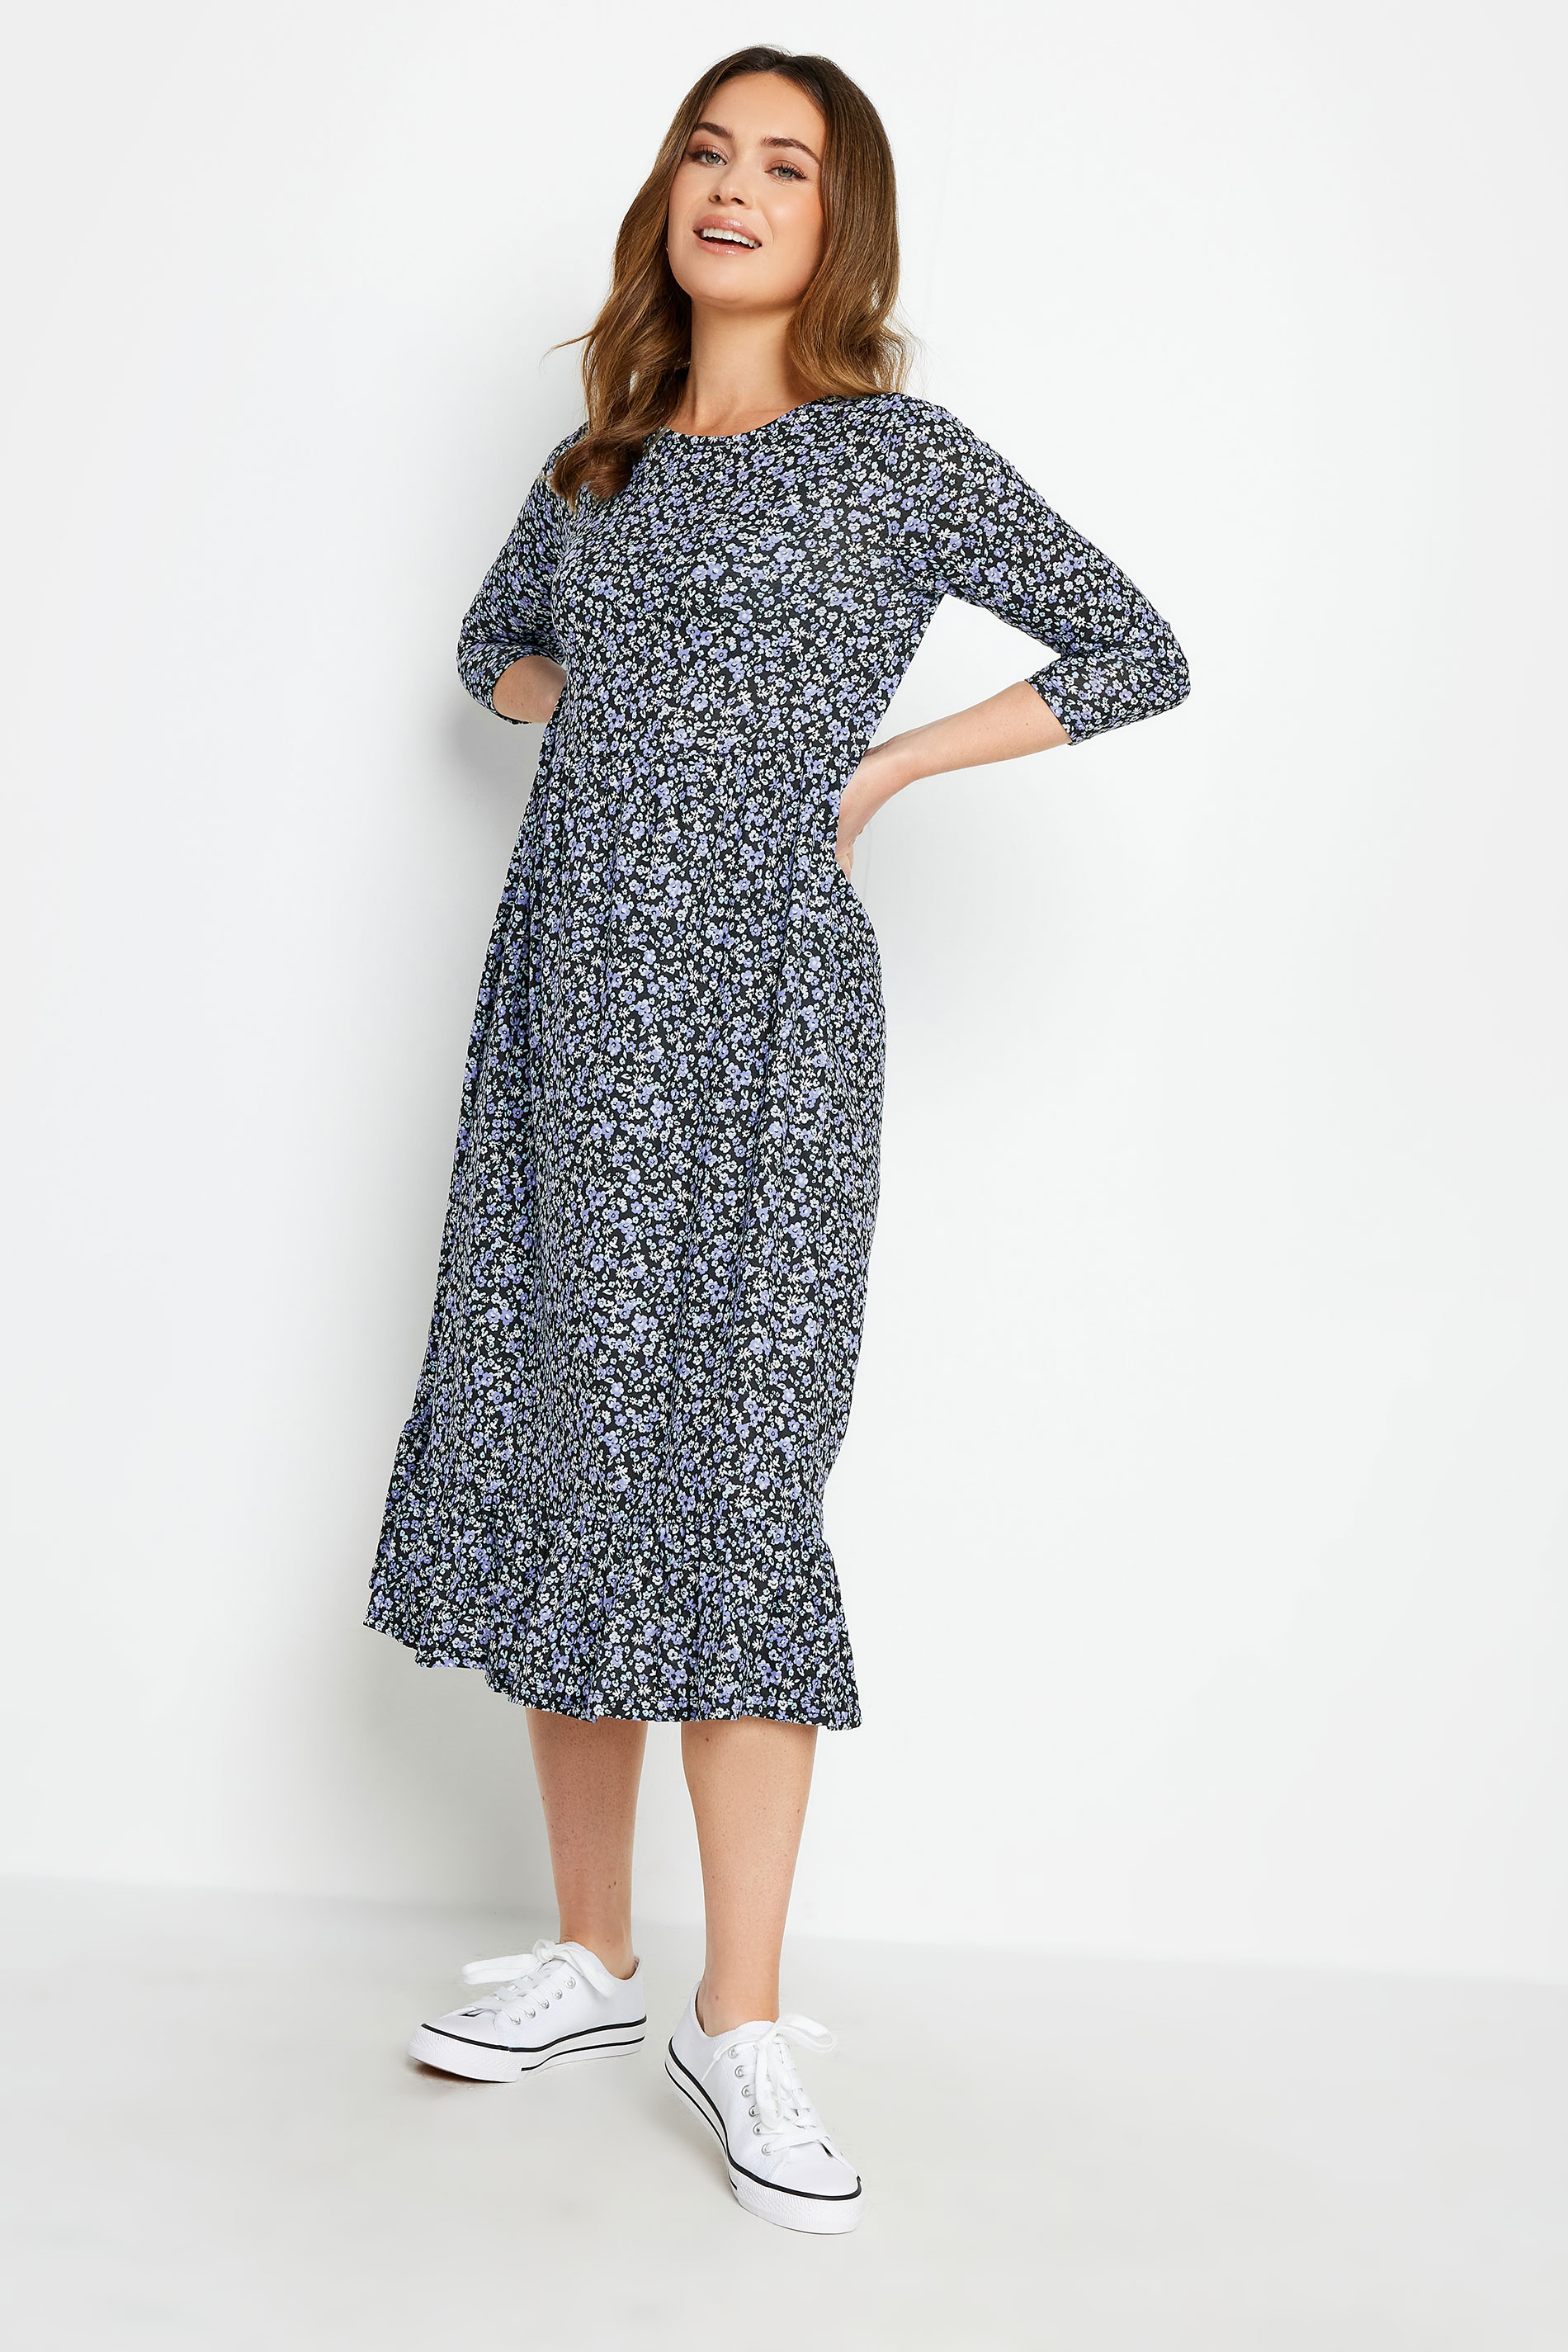 M&Co Petite Blue Ditsy Floral Print Midi Dress | M&Co 2